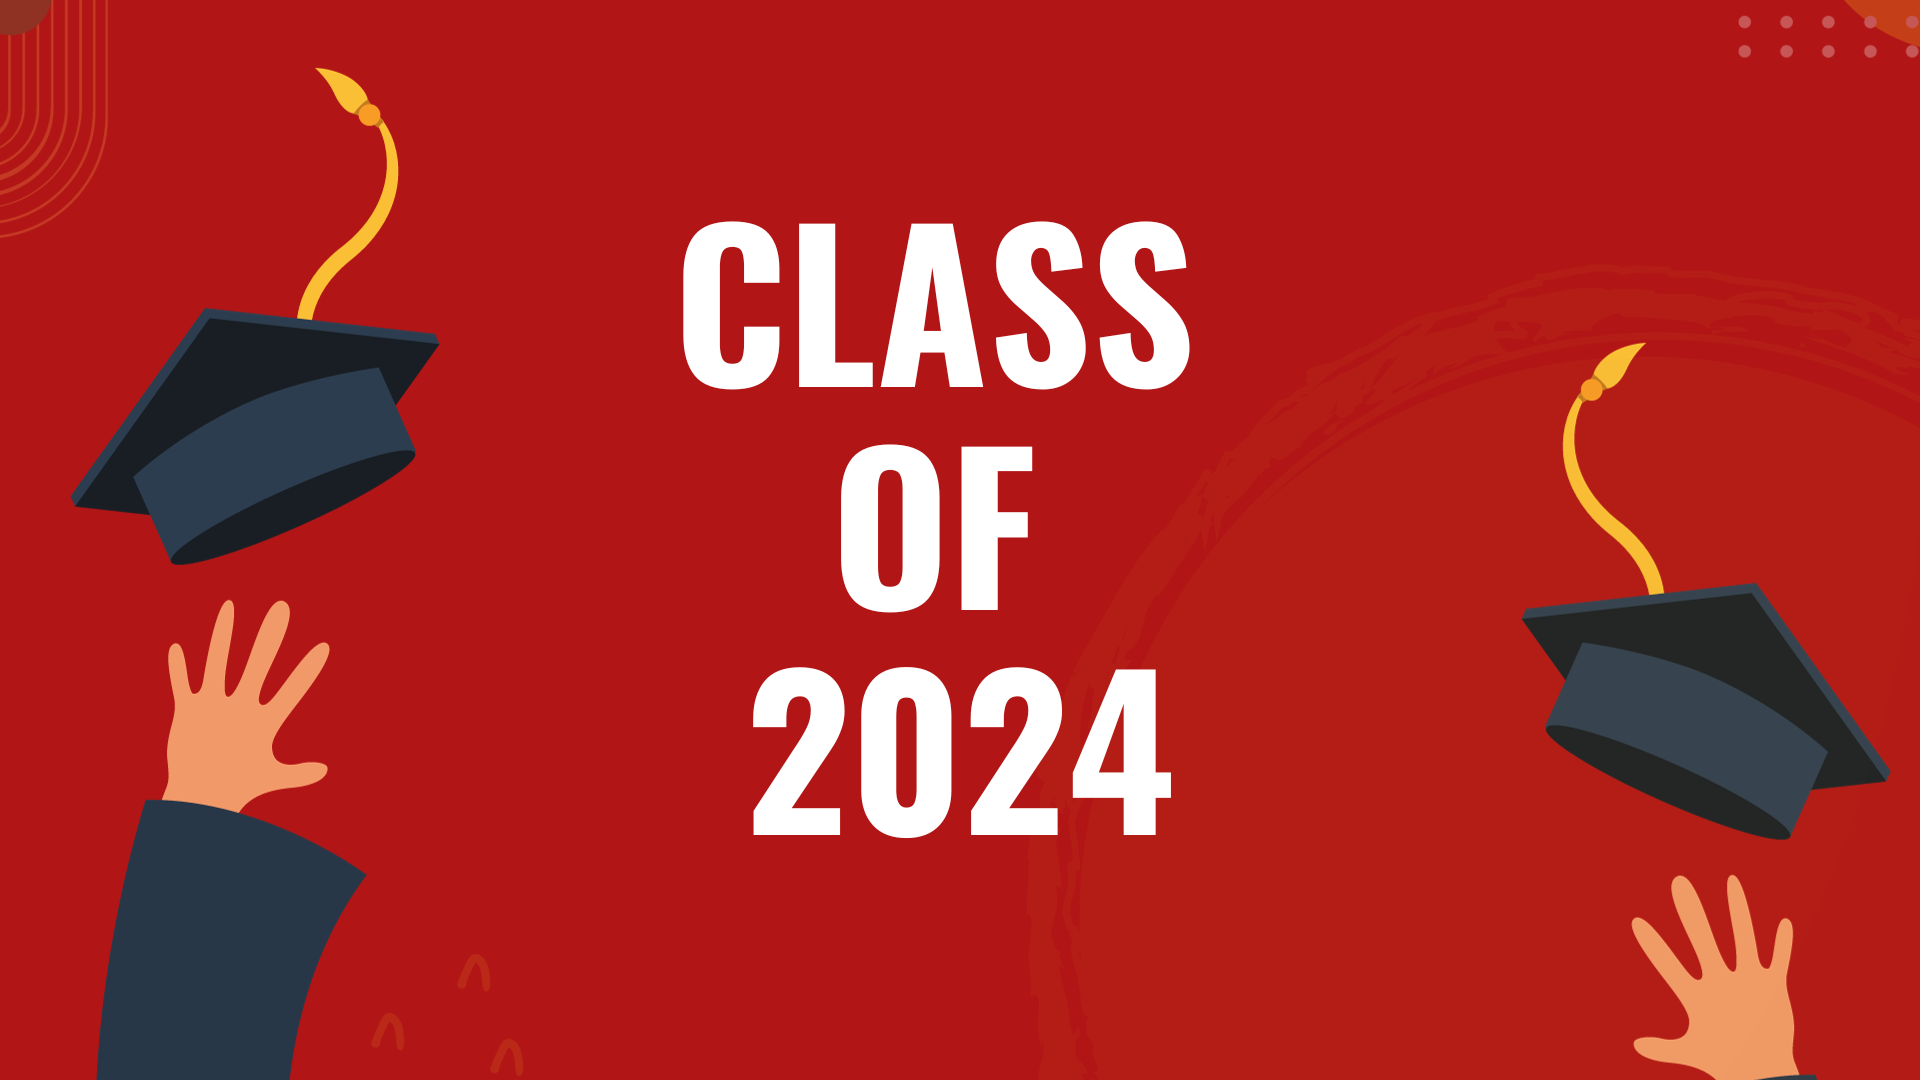 Class of 2024 Graduation Dates